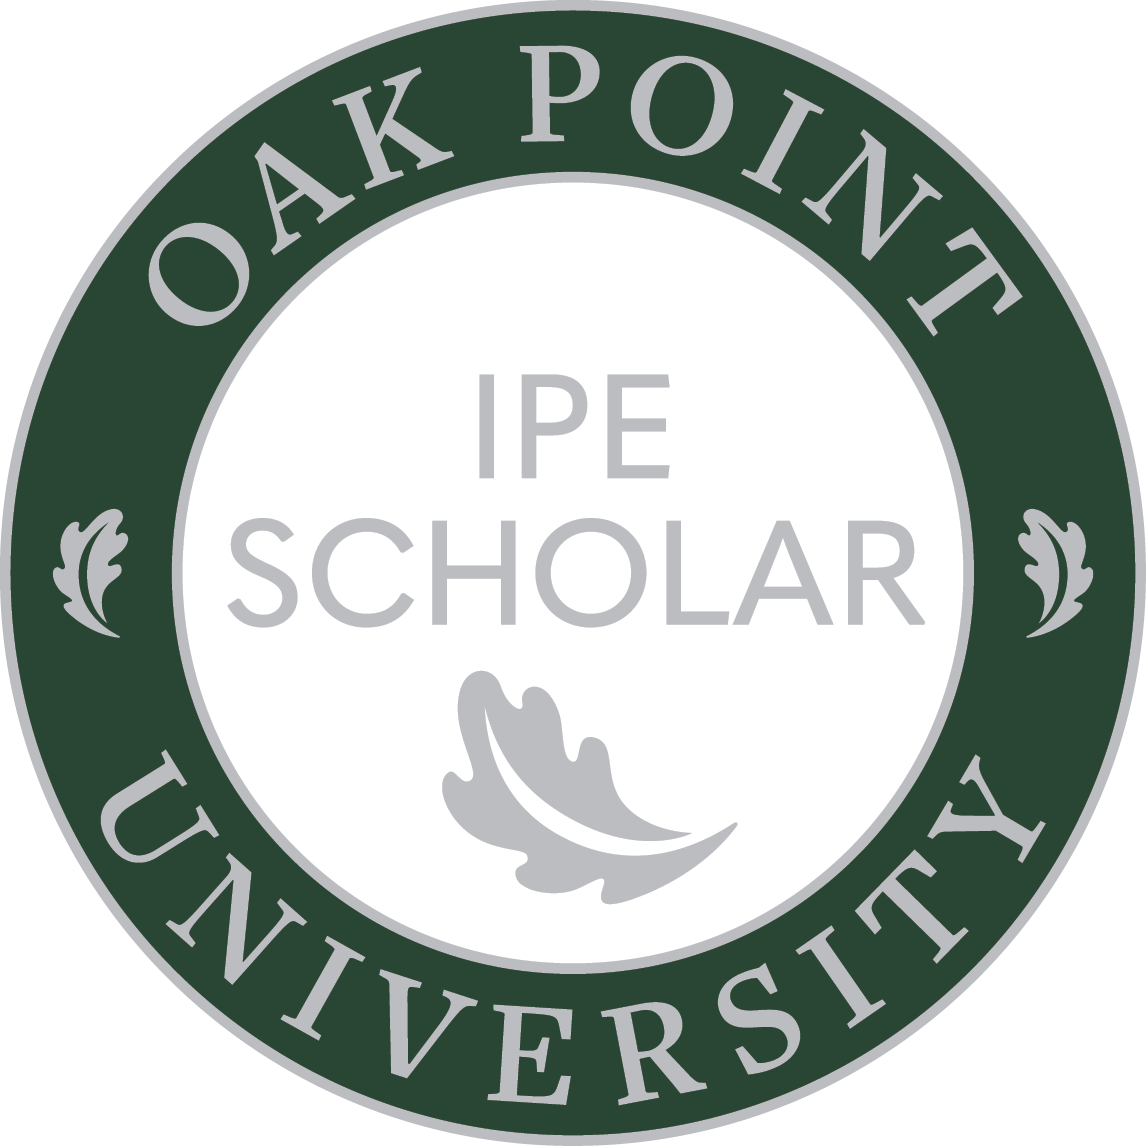 IPE scholars pin